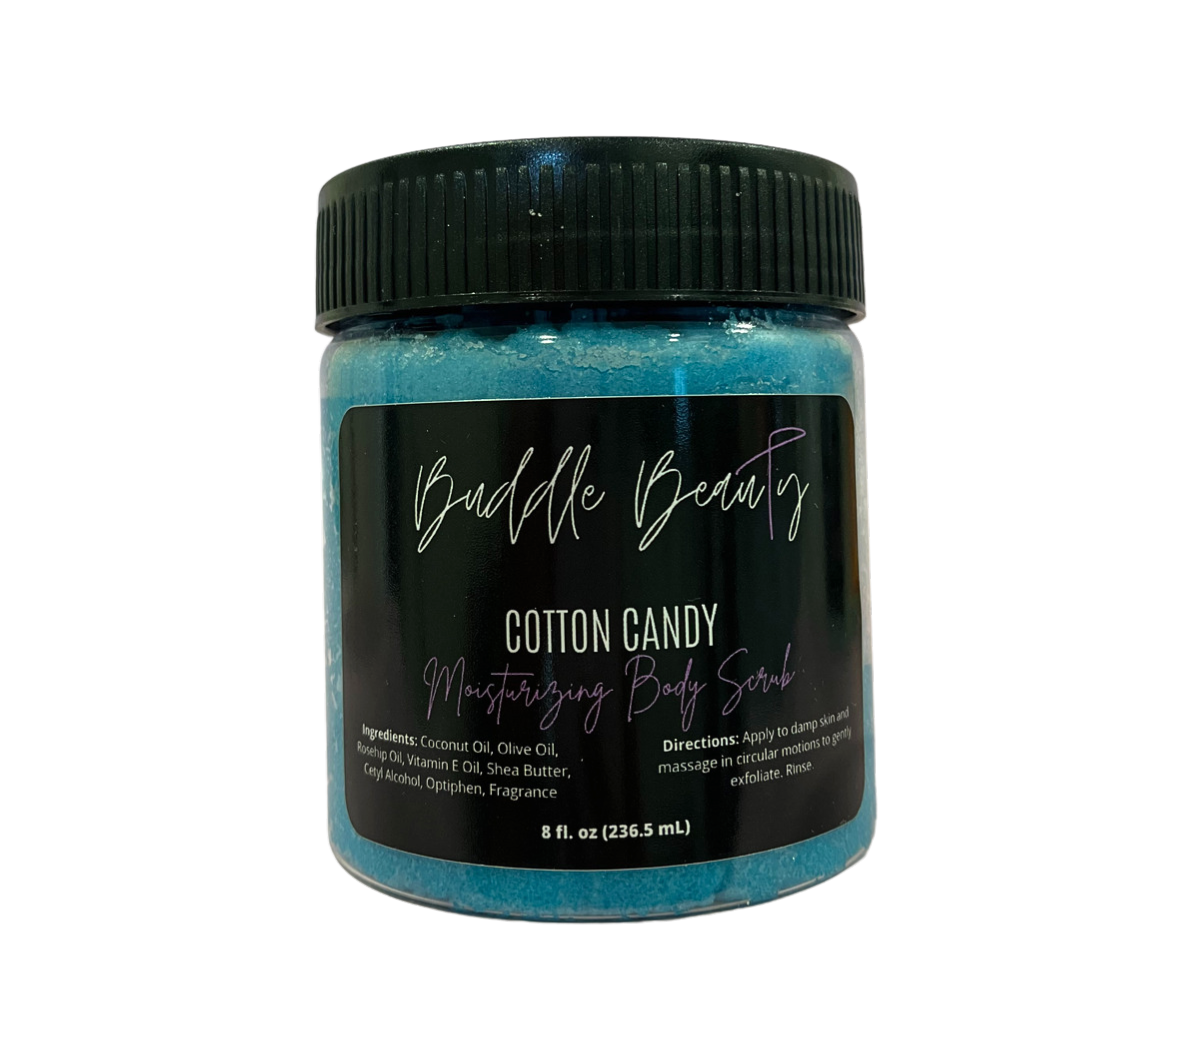 Cotton Candy Body Scrub